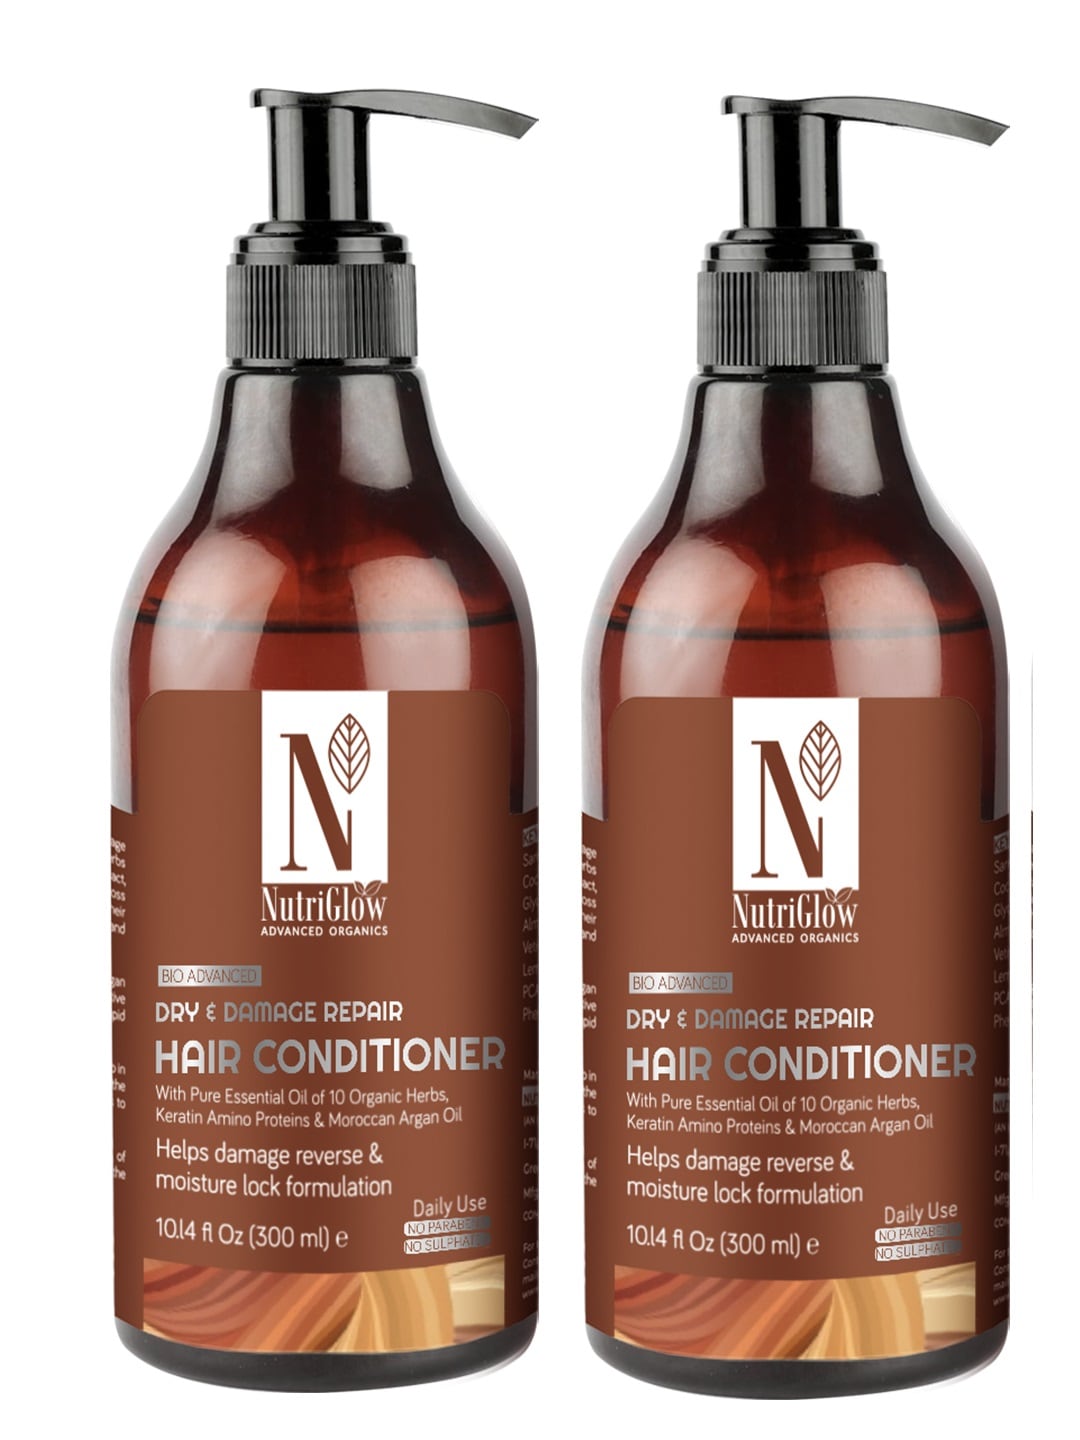 Nutriglow Advanced Organics Pack of 2 Bio Advanced Dry & Damage Repair Hair Conditioner Price in India